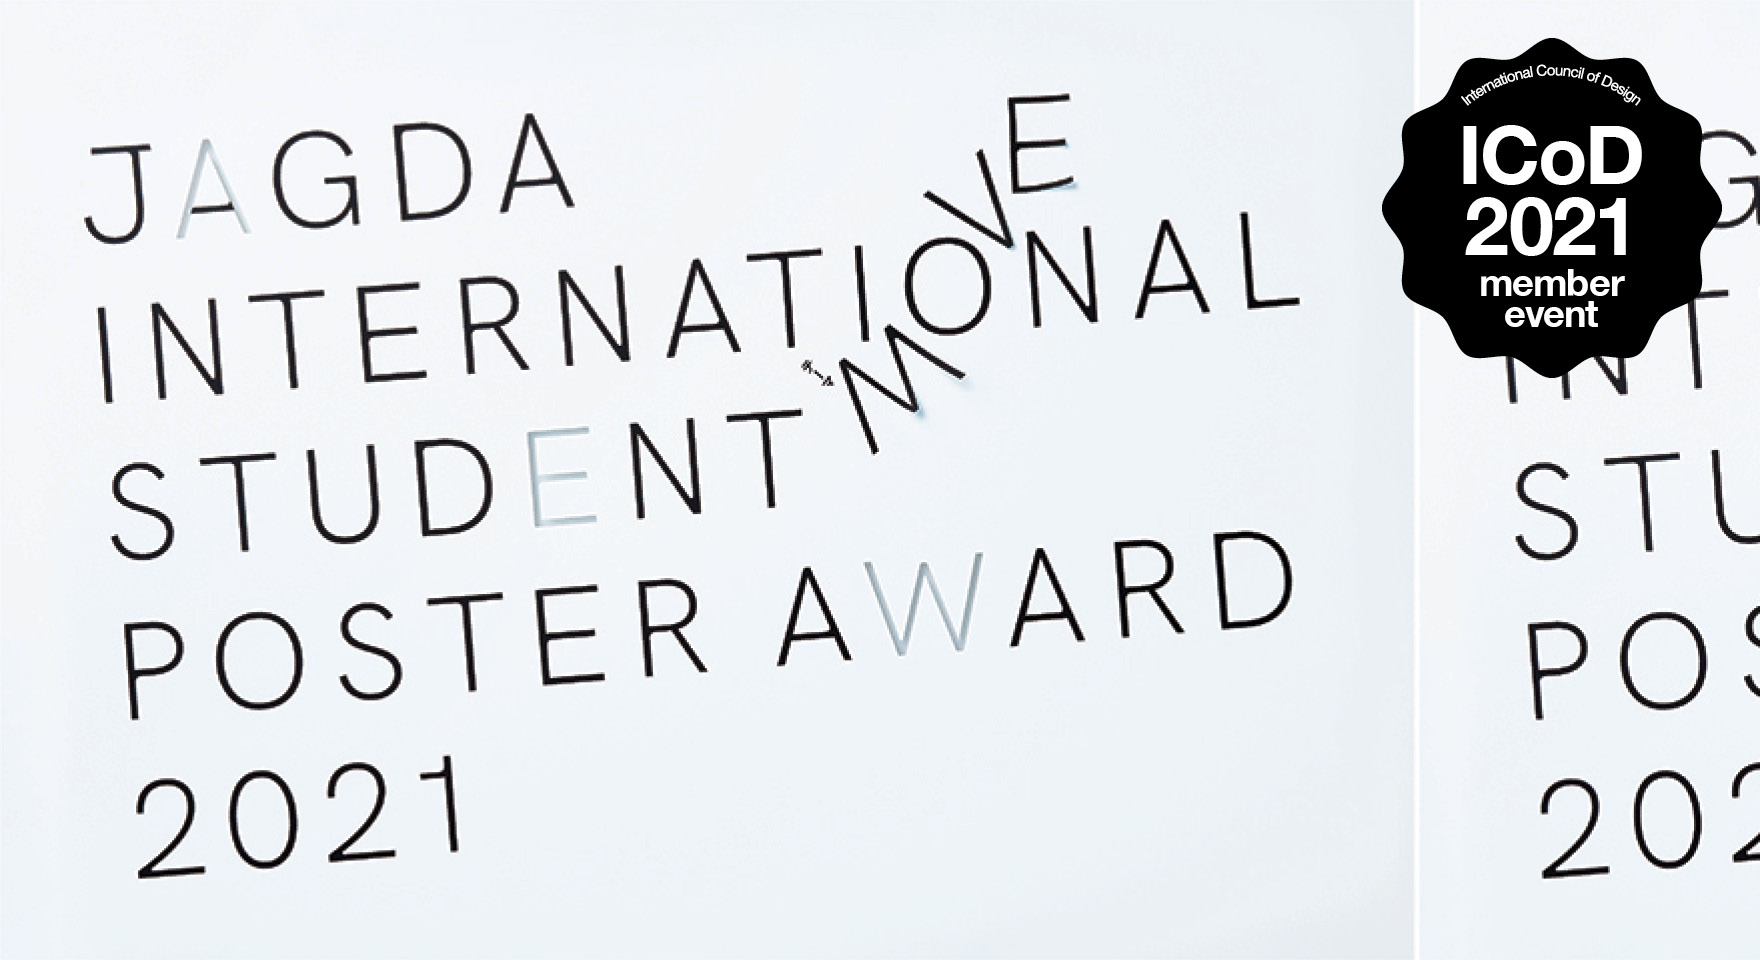 JAGDA international student poster award 2021